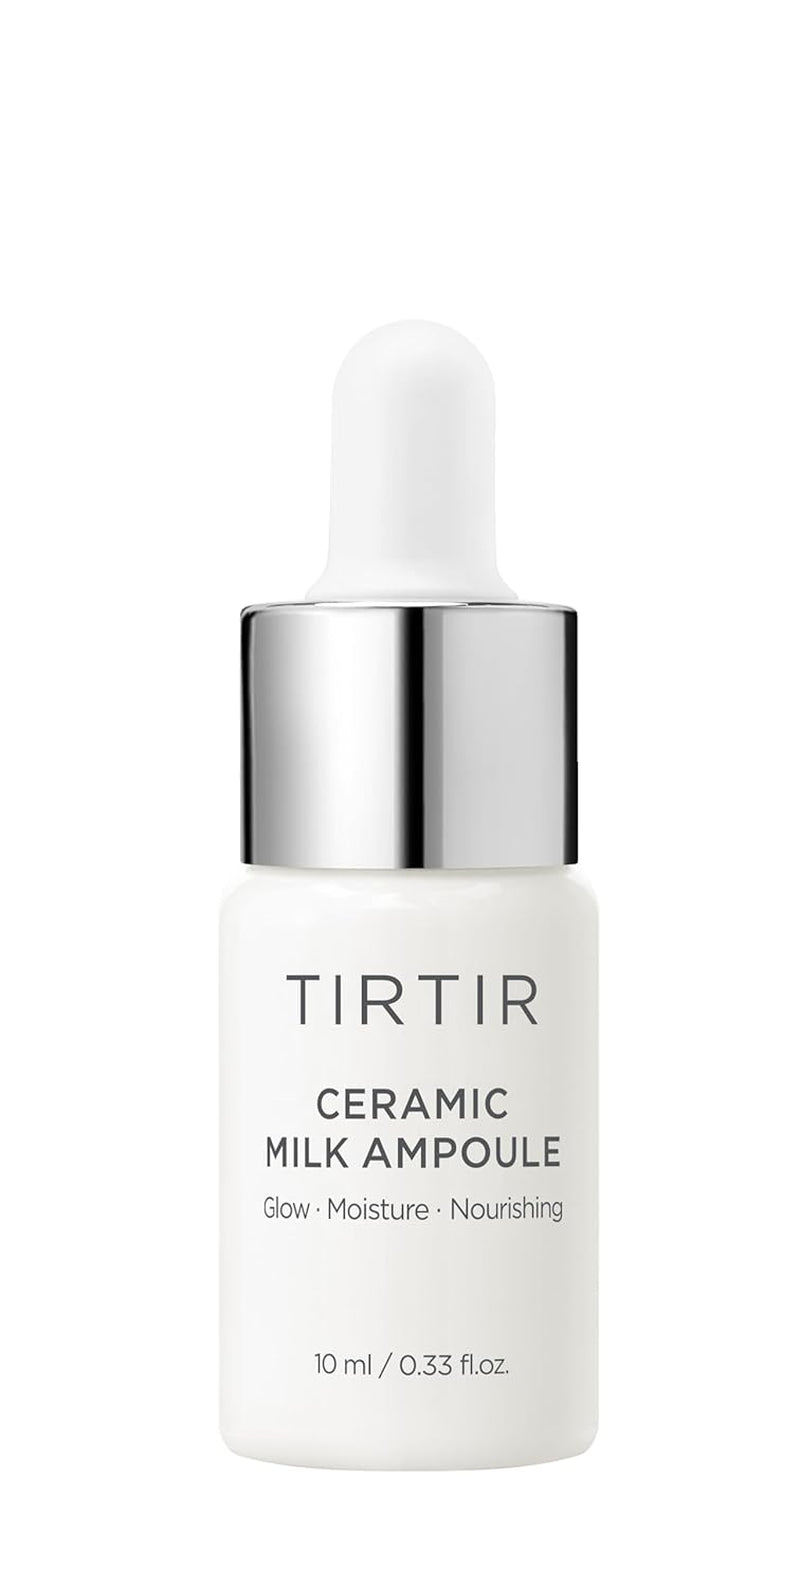 "Revitalize and Nourish Your Skin with TIRTIR Ceramic Milk Ampoule - 1.35 Fluid Ounces"